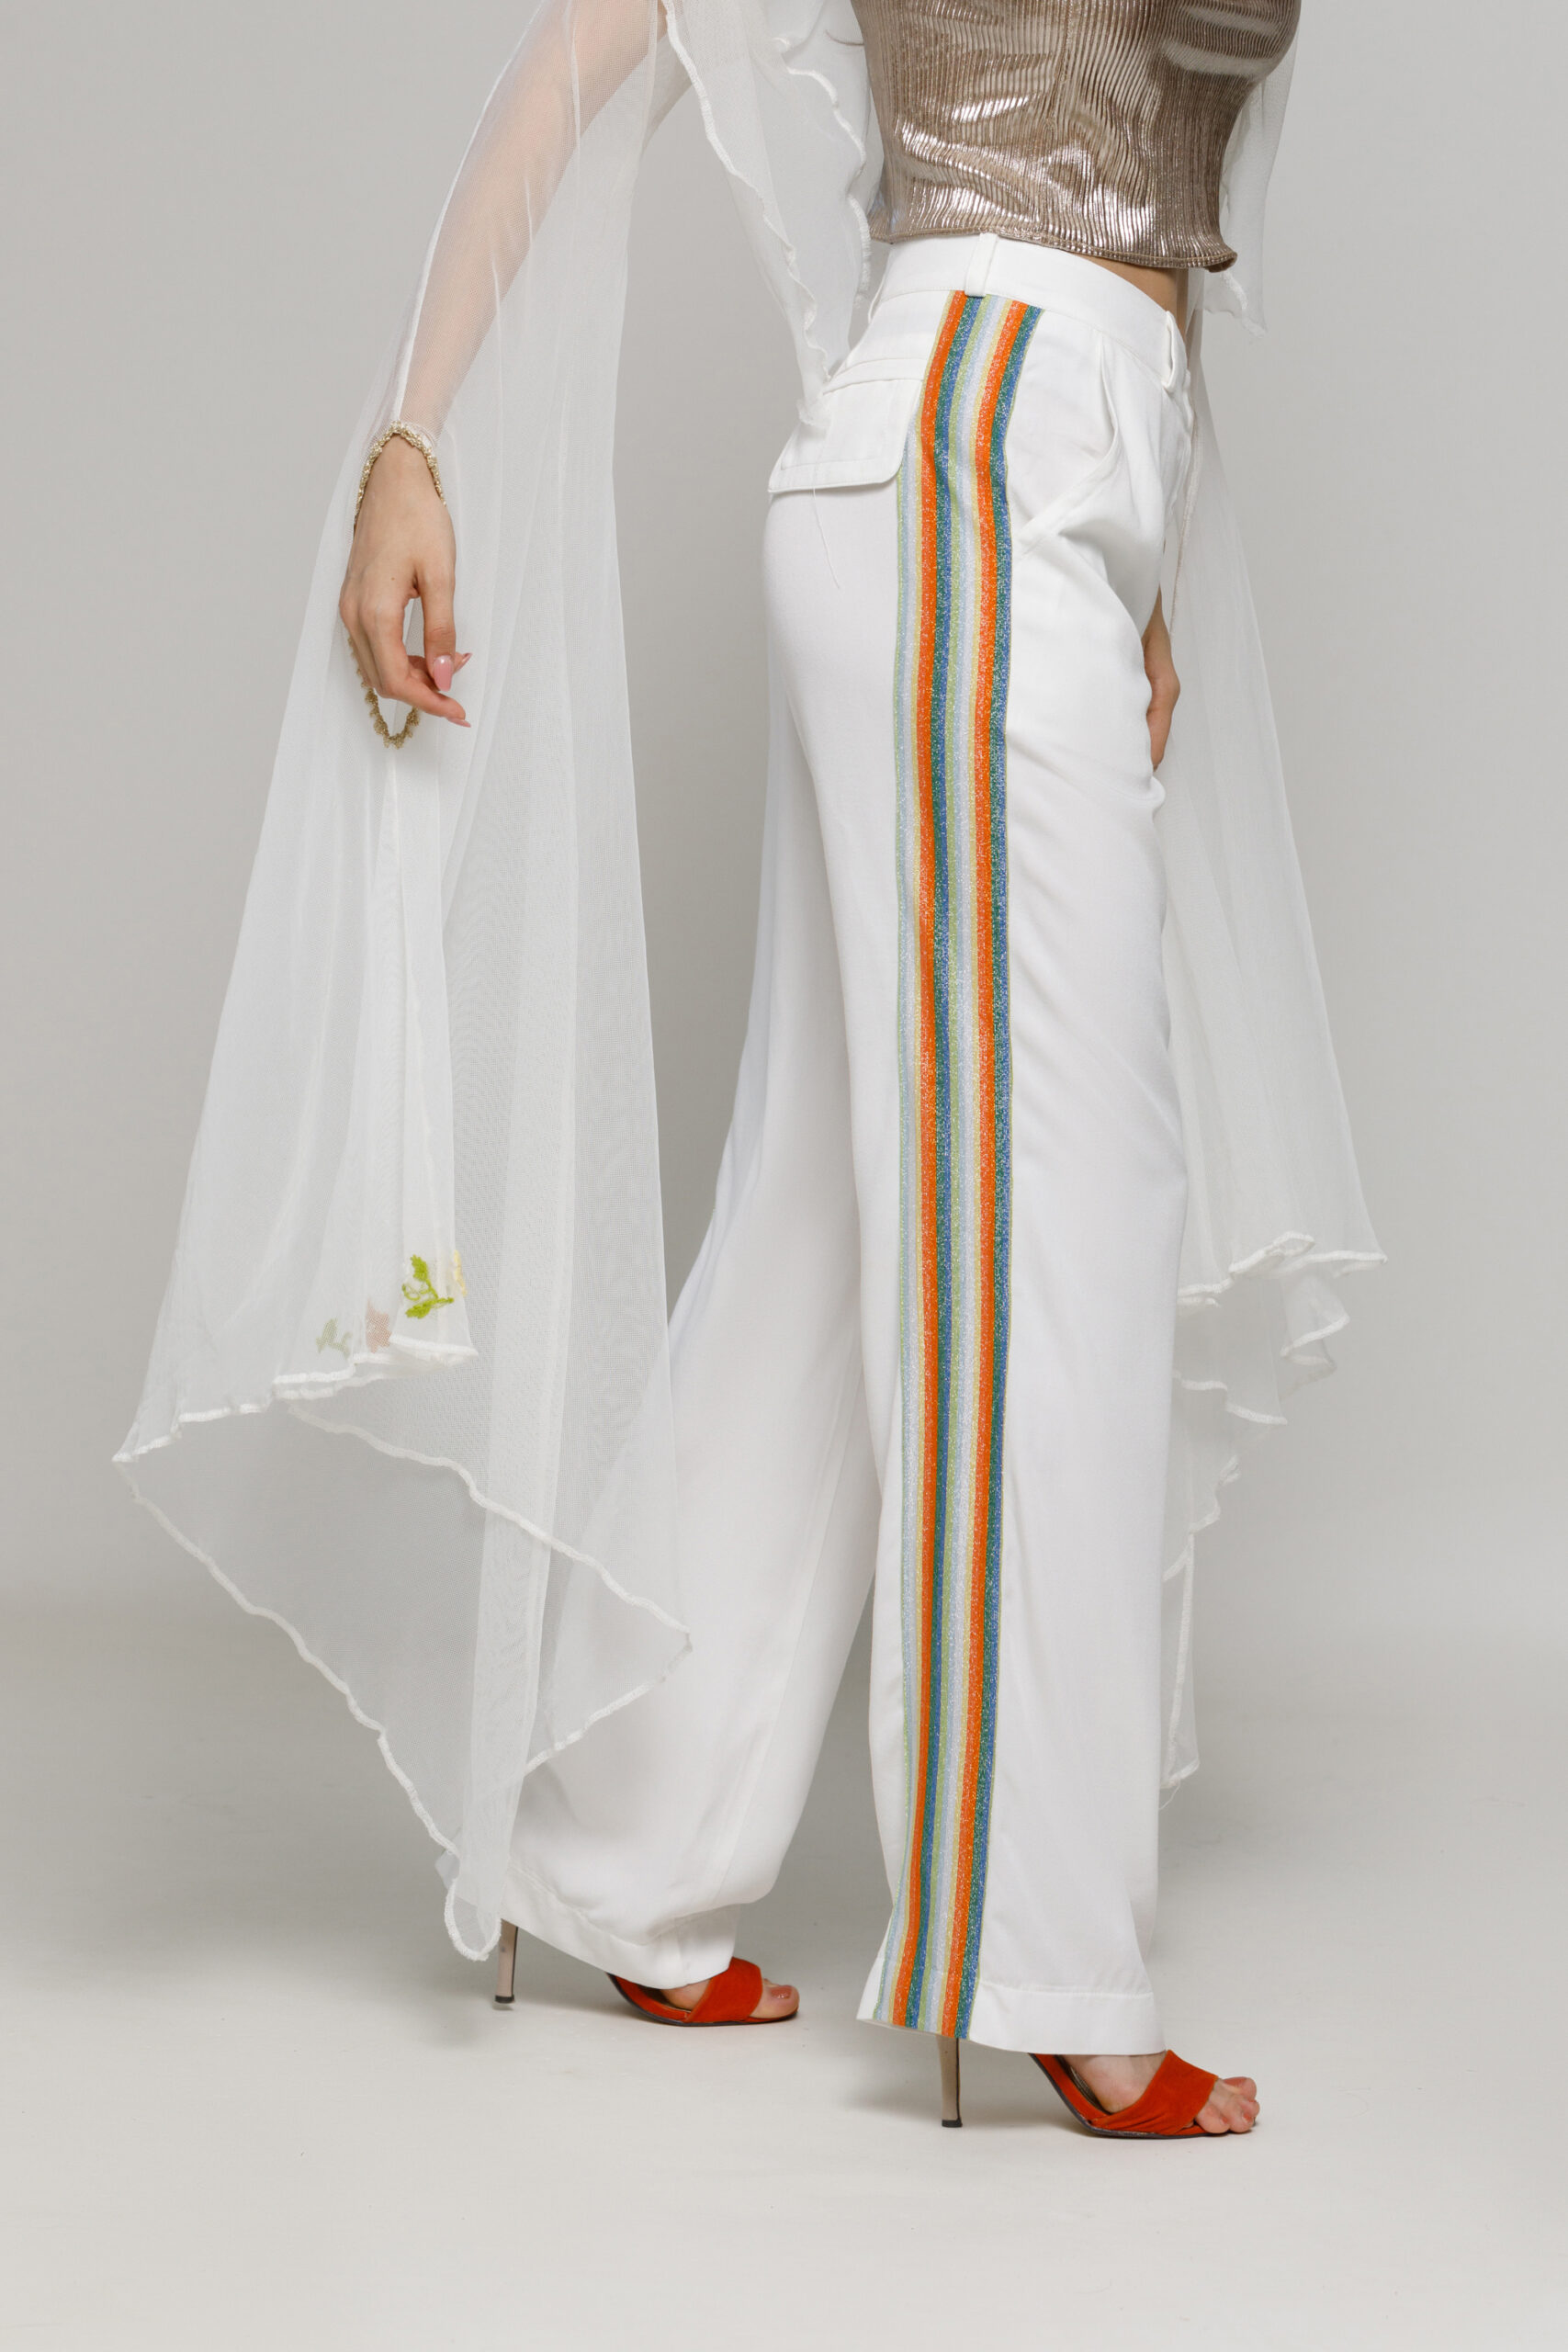 Pantalon GLADYS alb din viscoza. Materiale naturale, design unicat, cu broderie si aplicatii handmade